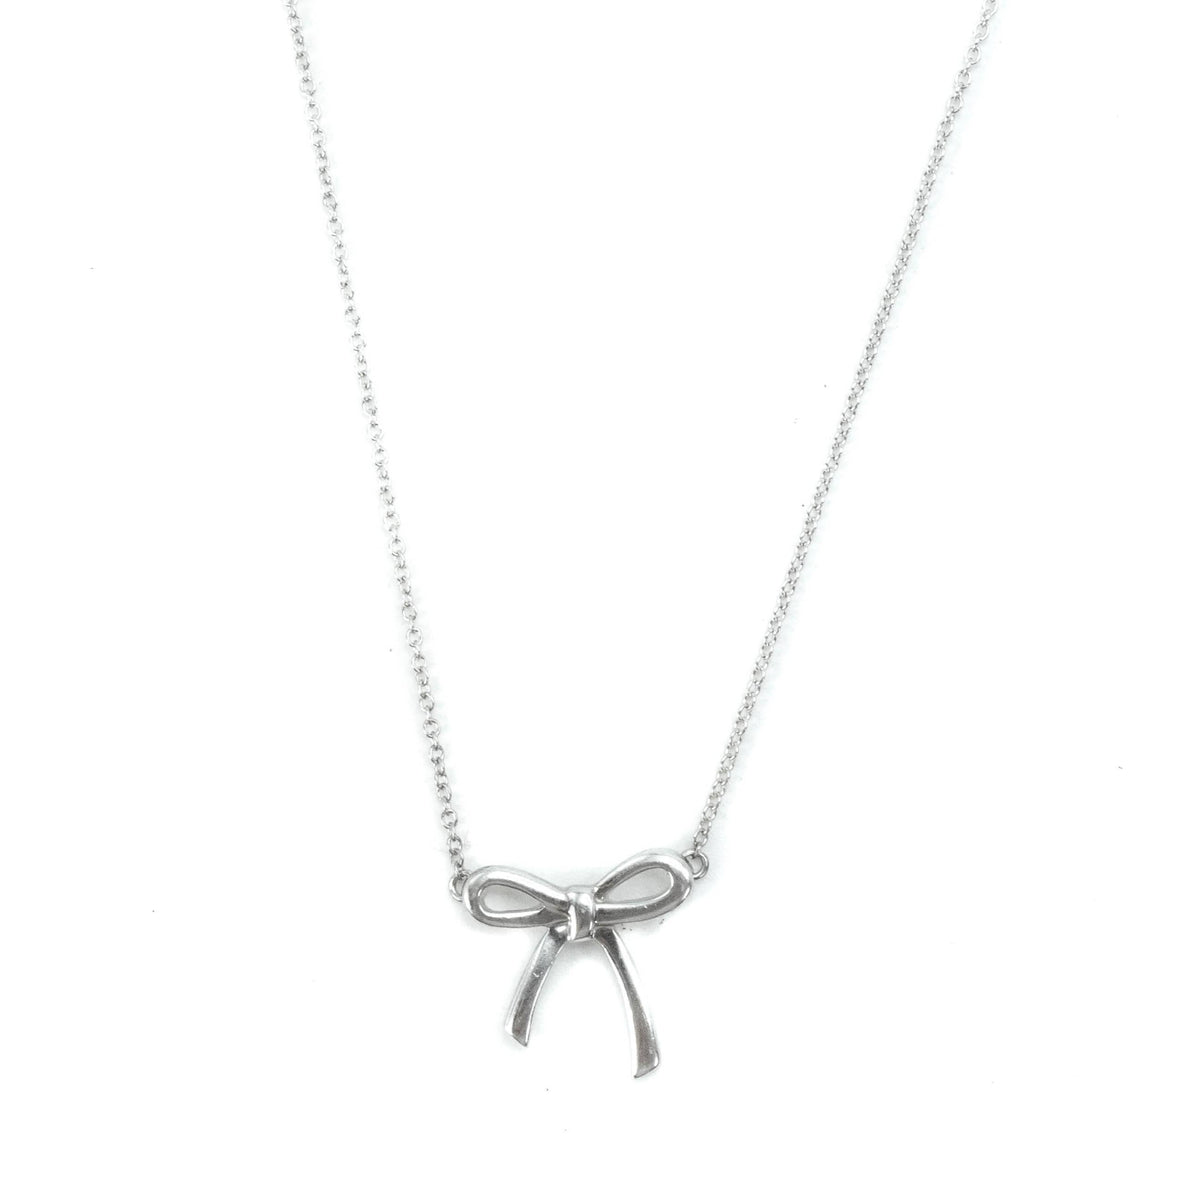 Tiffany & Co Bow Mini Sterling Silver Pendant Necklace - 16"